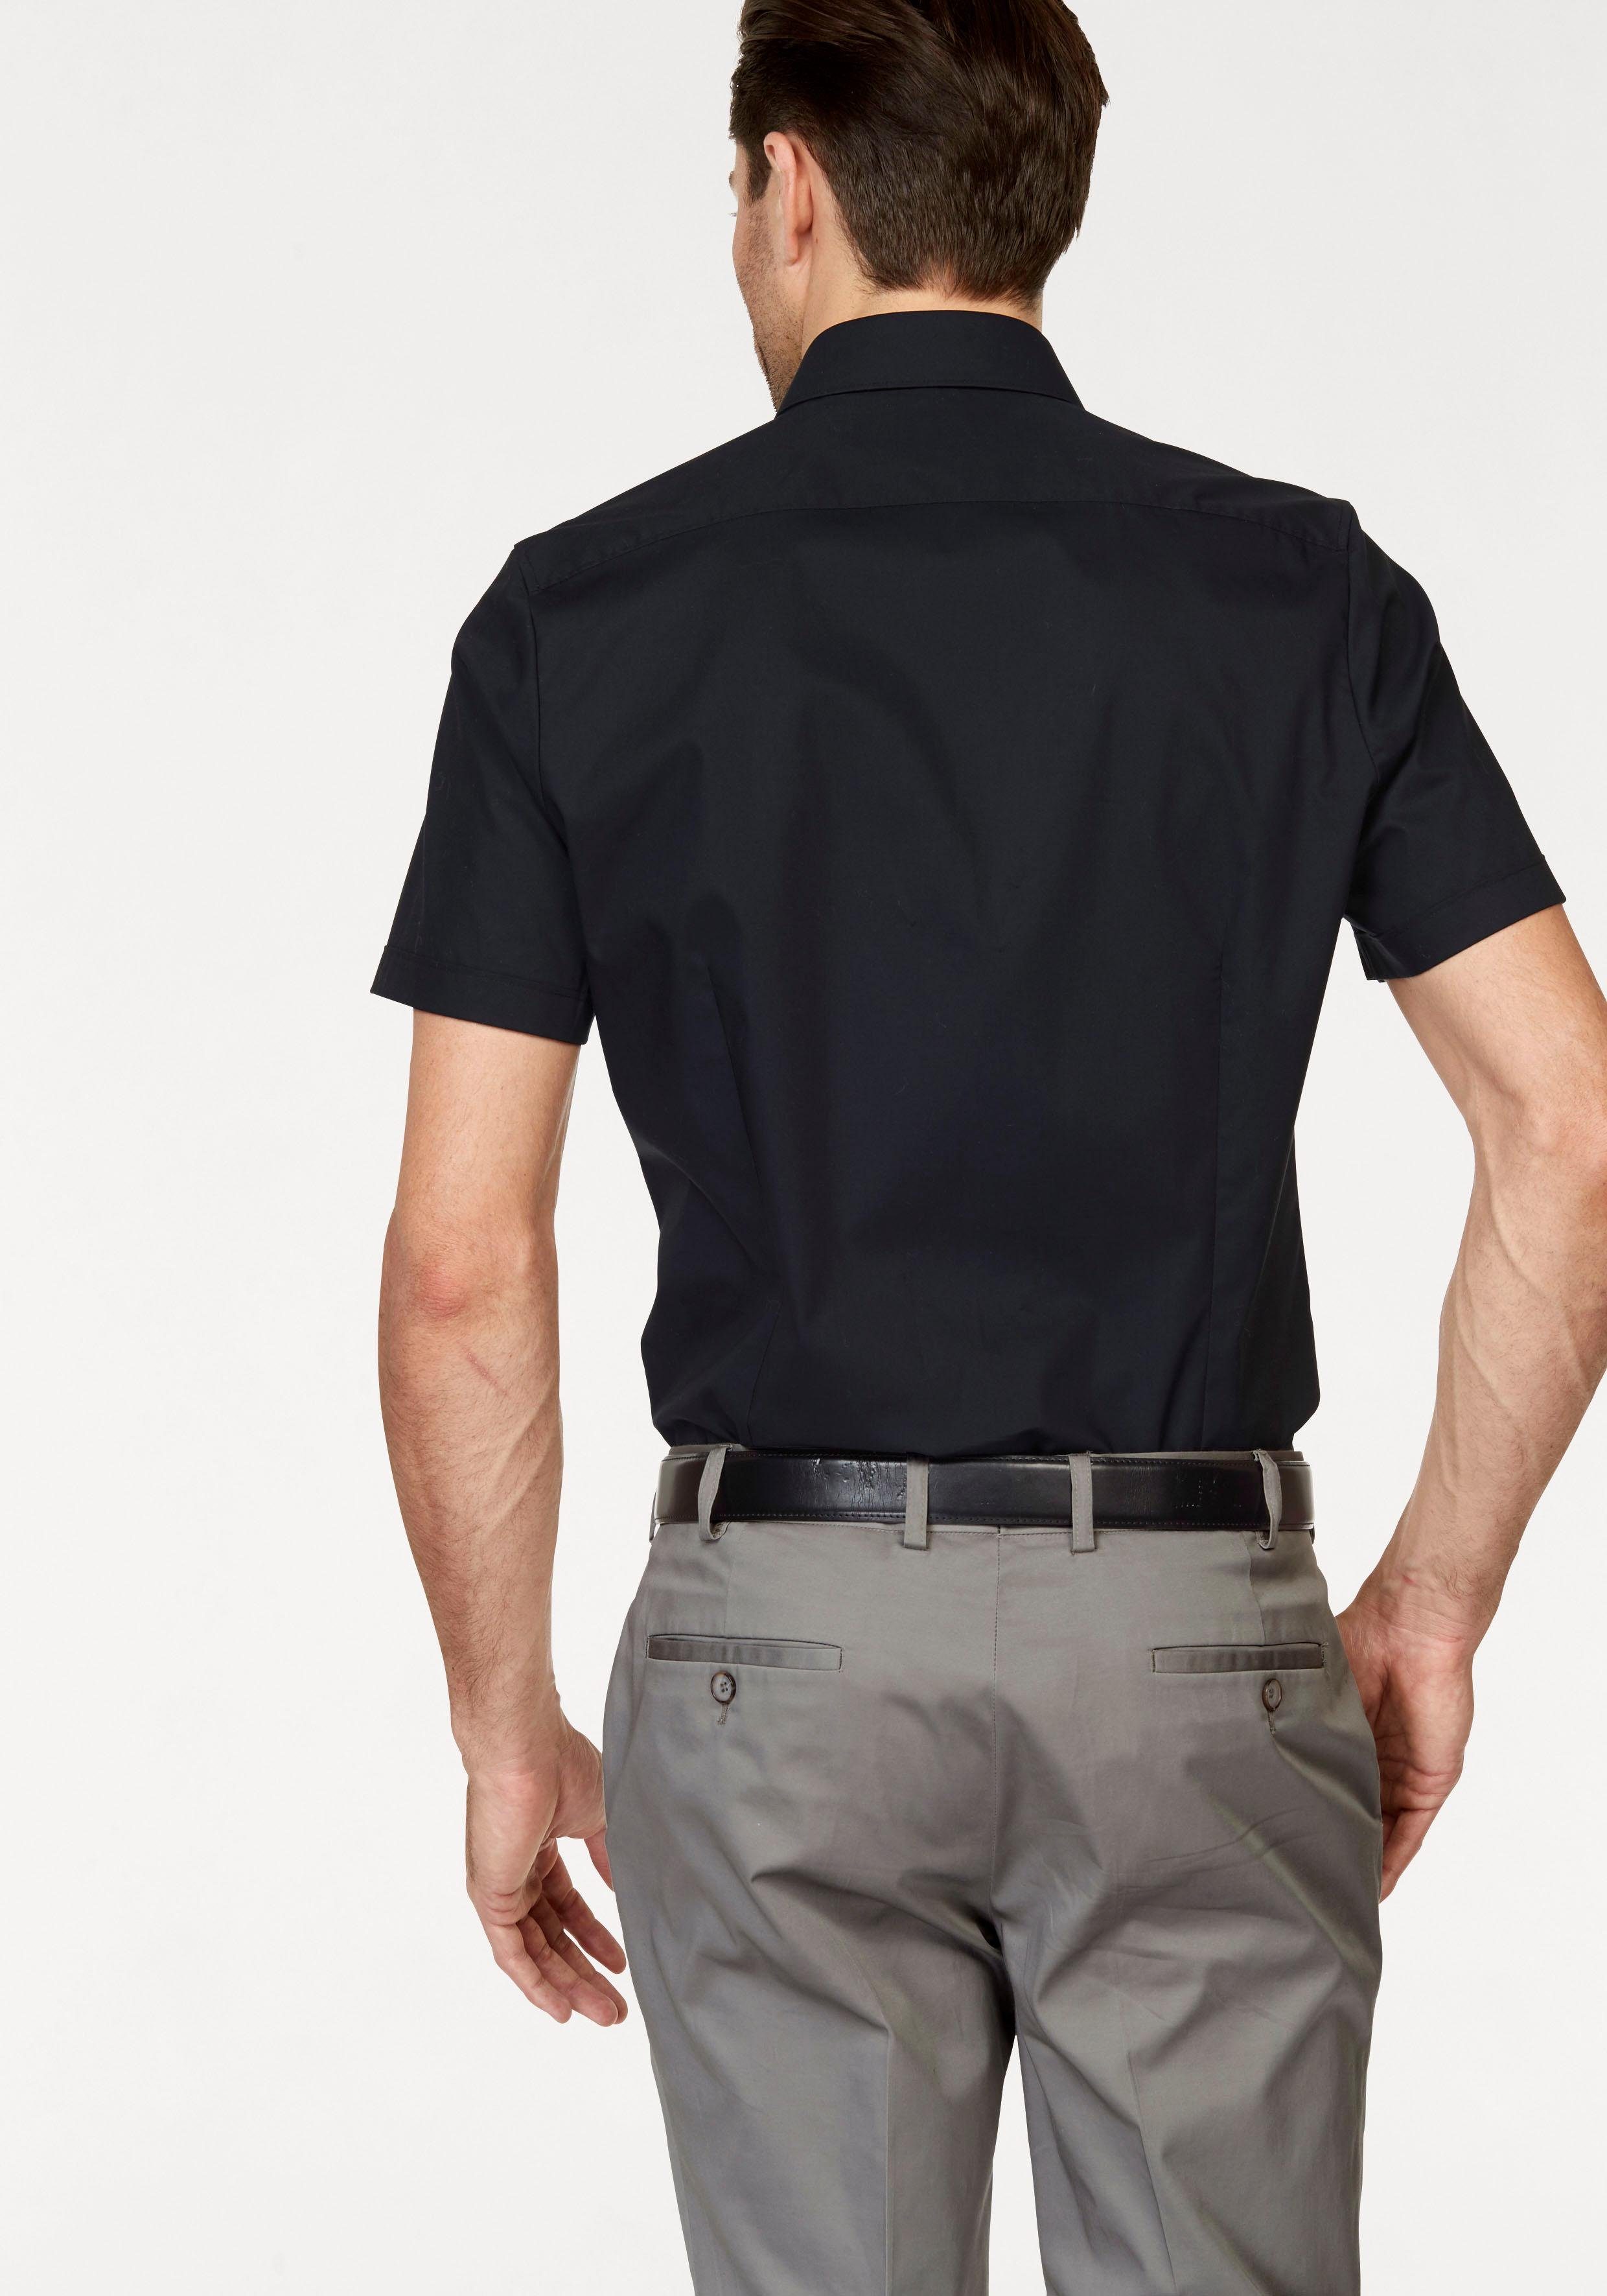 body Businesshemd Five Level klassisch, OLYMP unifarben schwarz fit